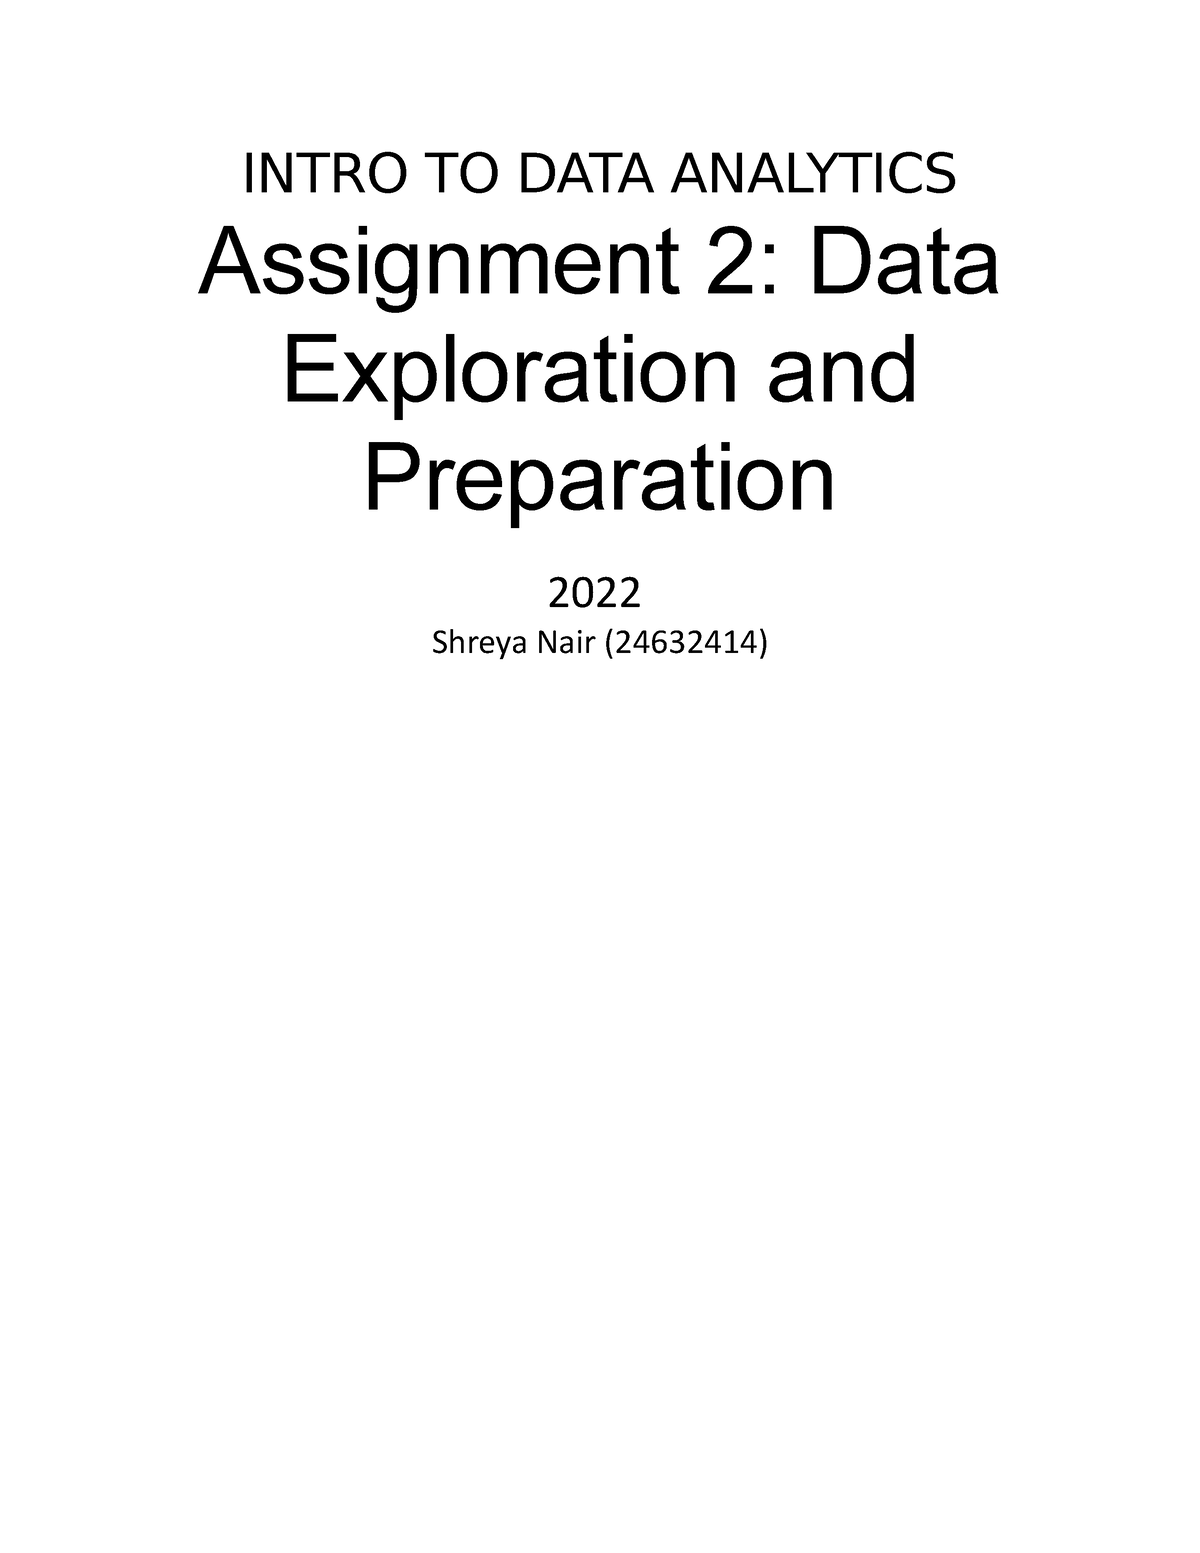 big data analytics assignment questions